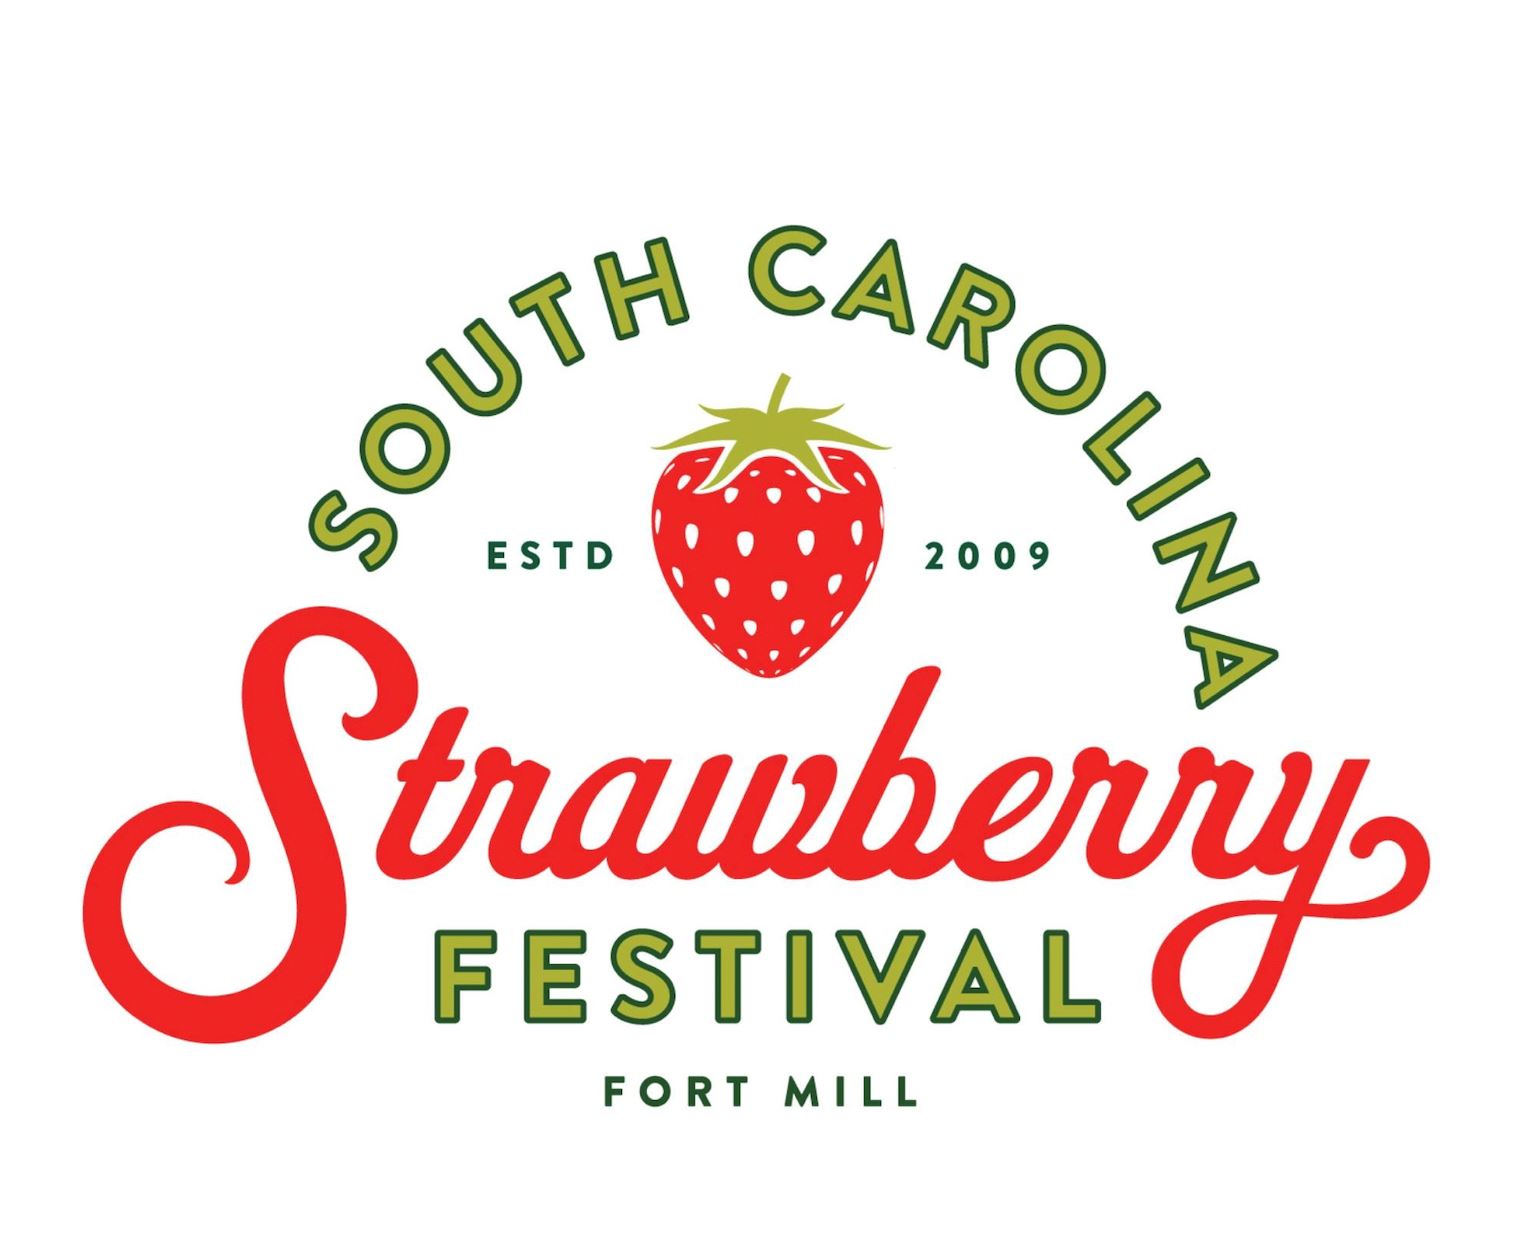 SC Strawberry Festival/Fort Mill